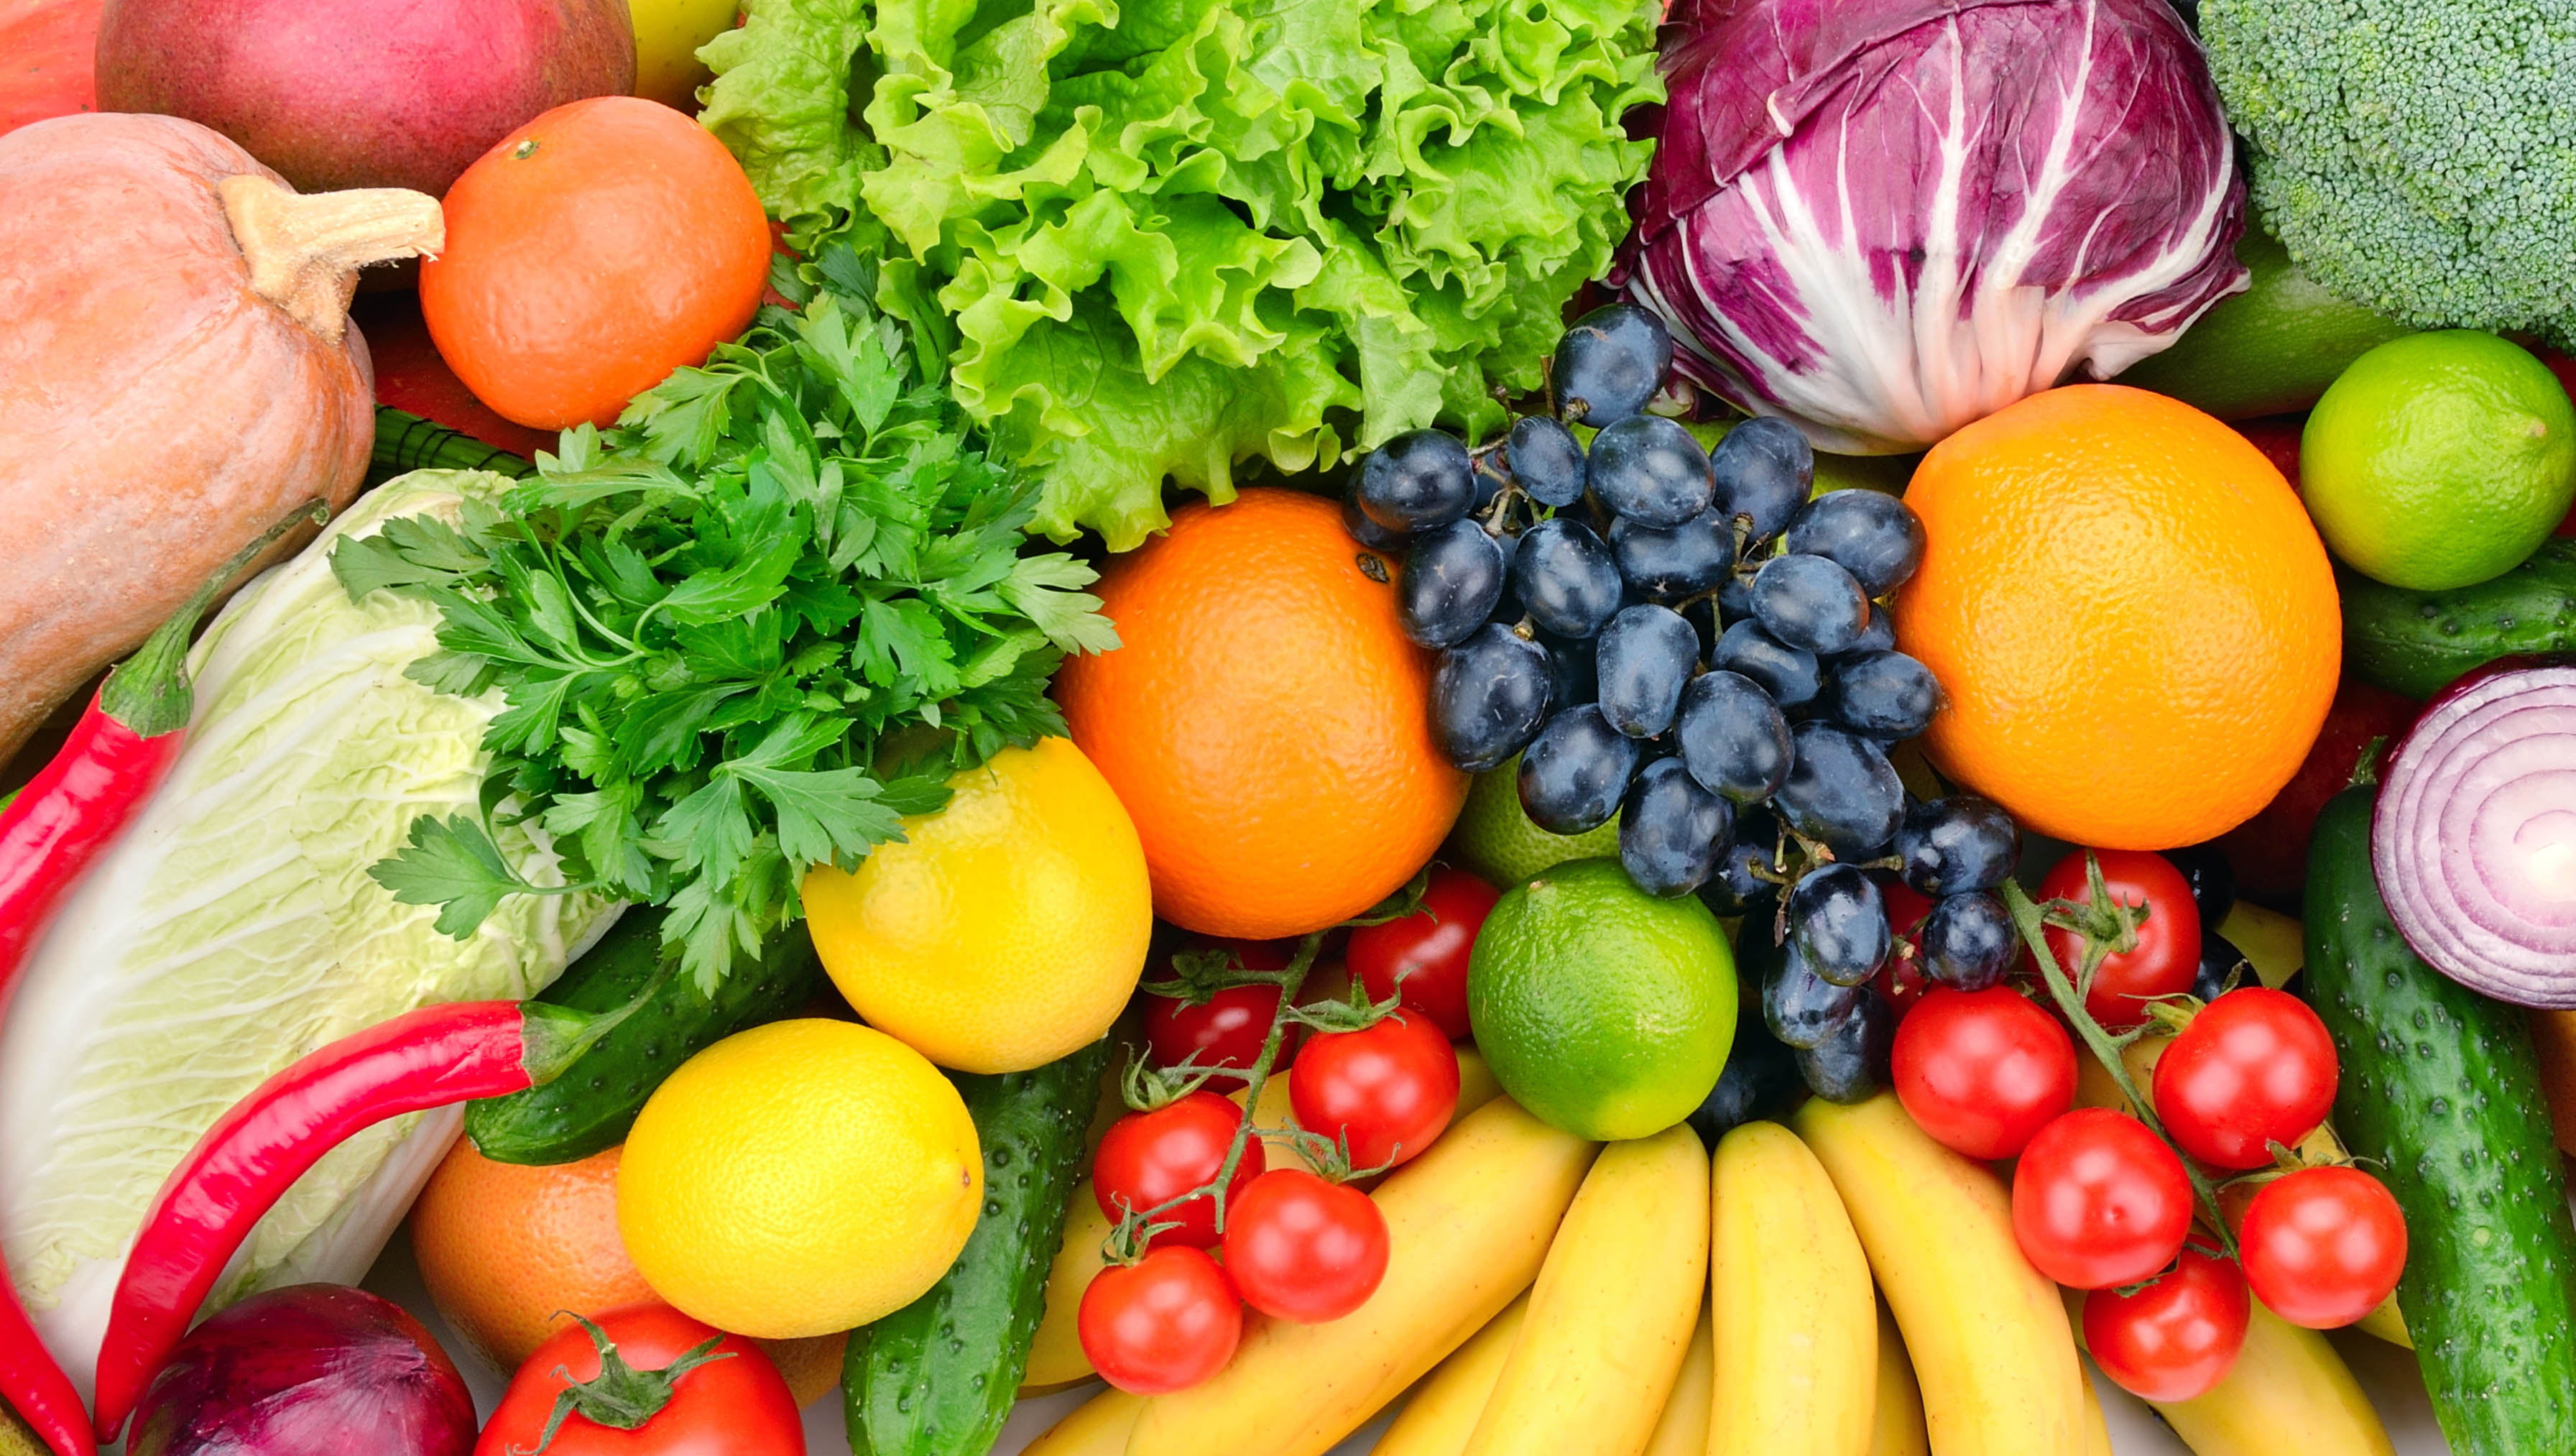 Организация фрукты овощи. Овощи и фрукты. JDJIB B aheernb. Овощи и ягоды. Свежие овощи и фрукты.